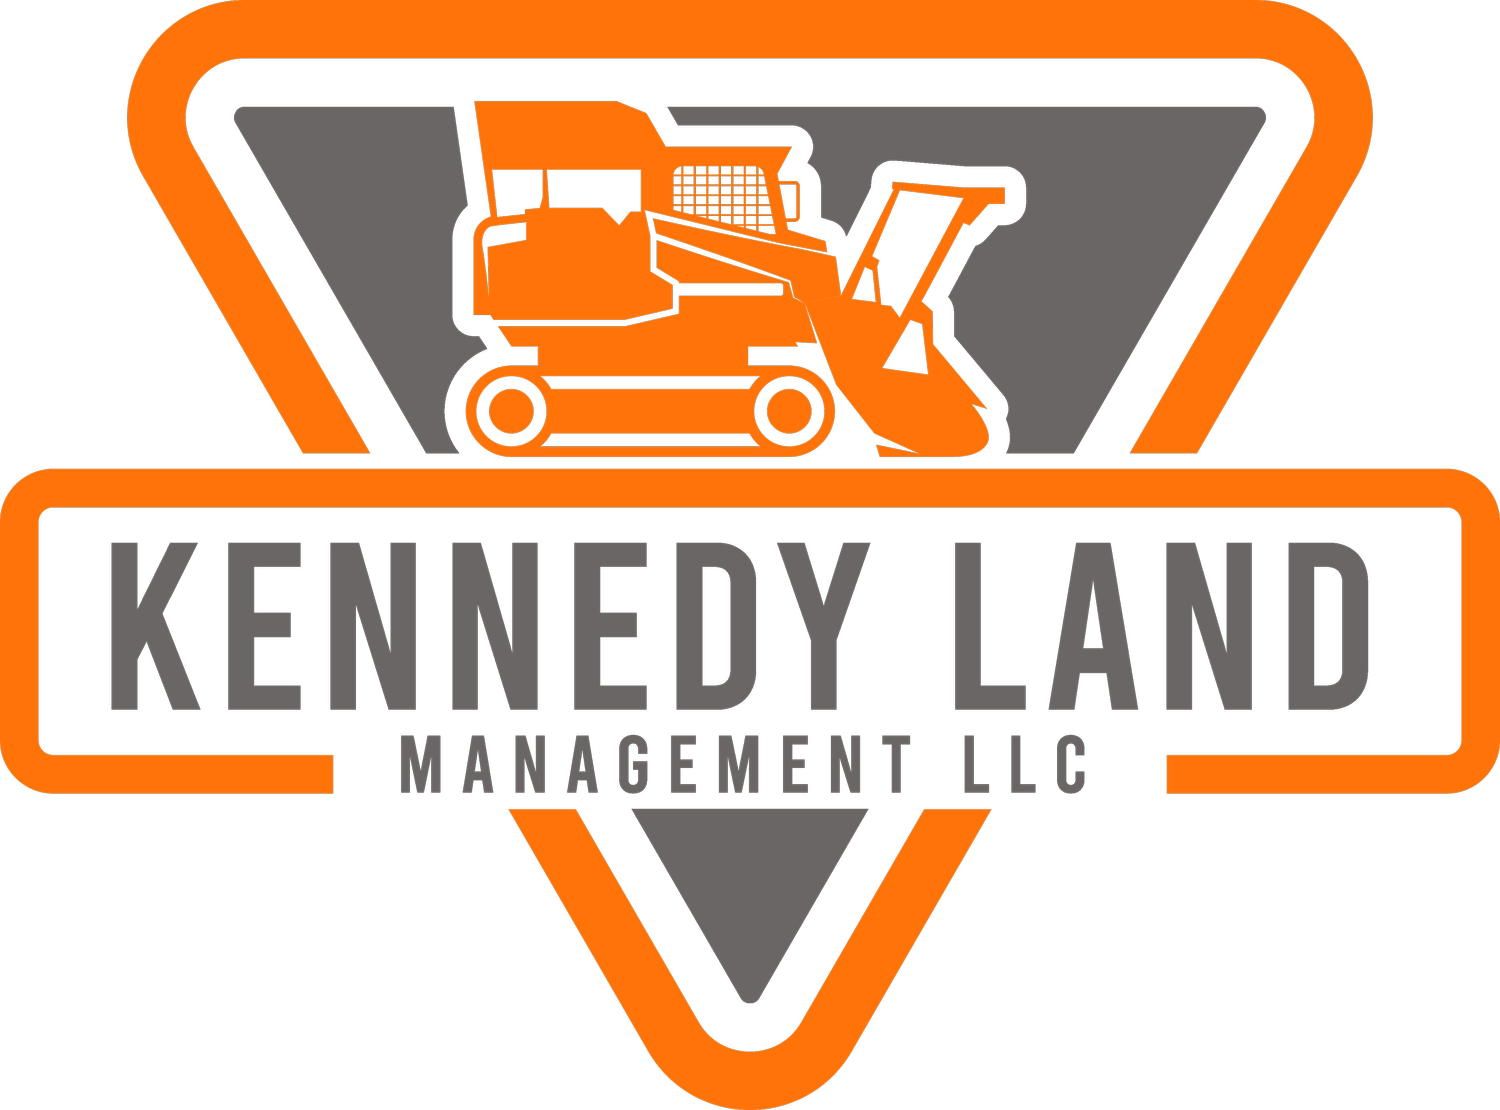 Kennedy Land Management LLC